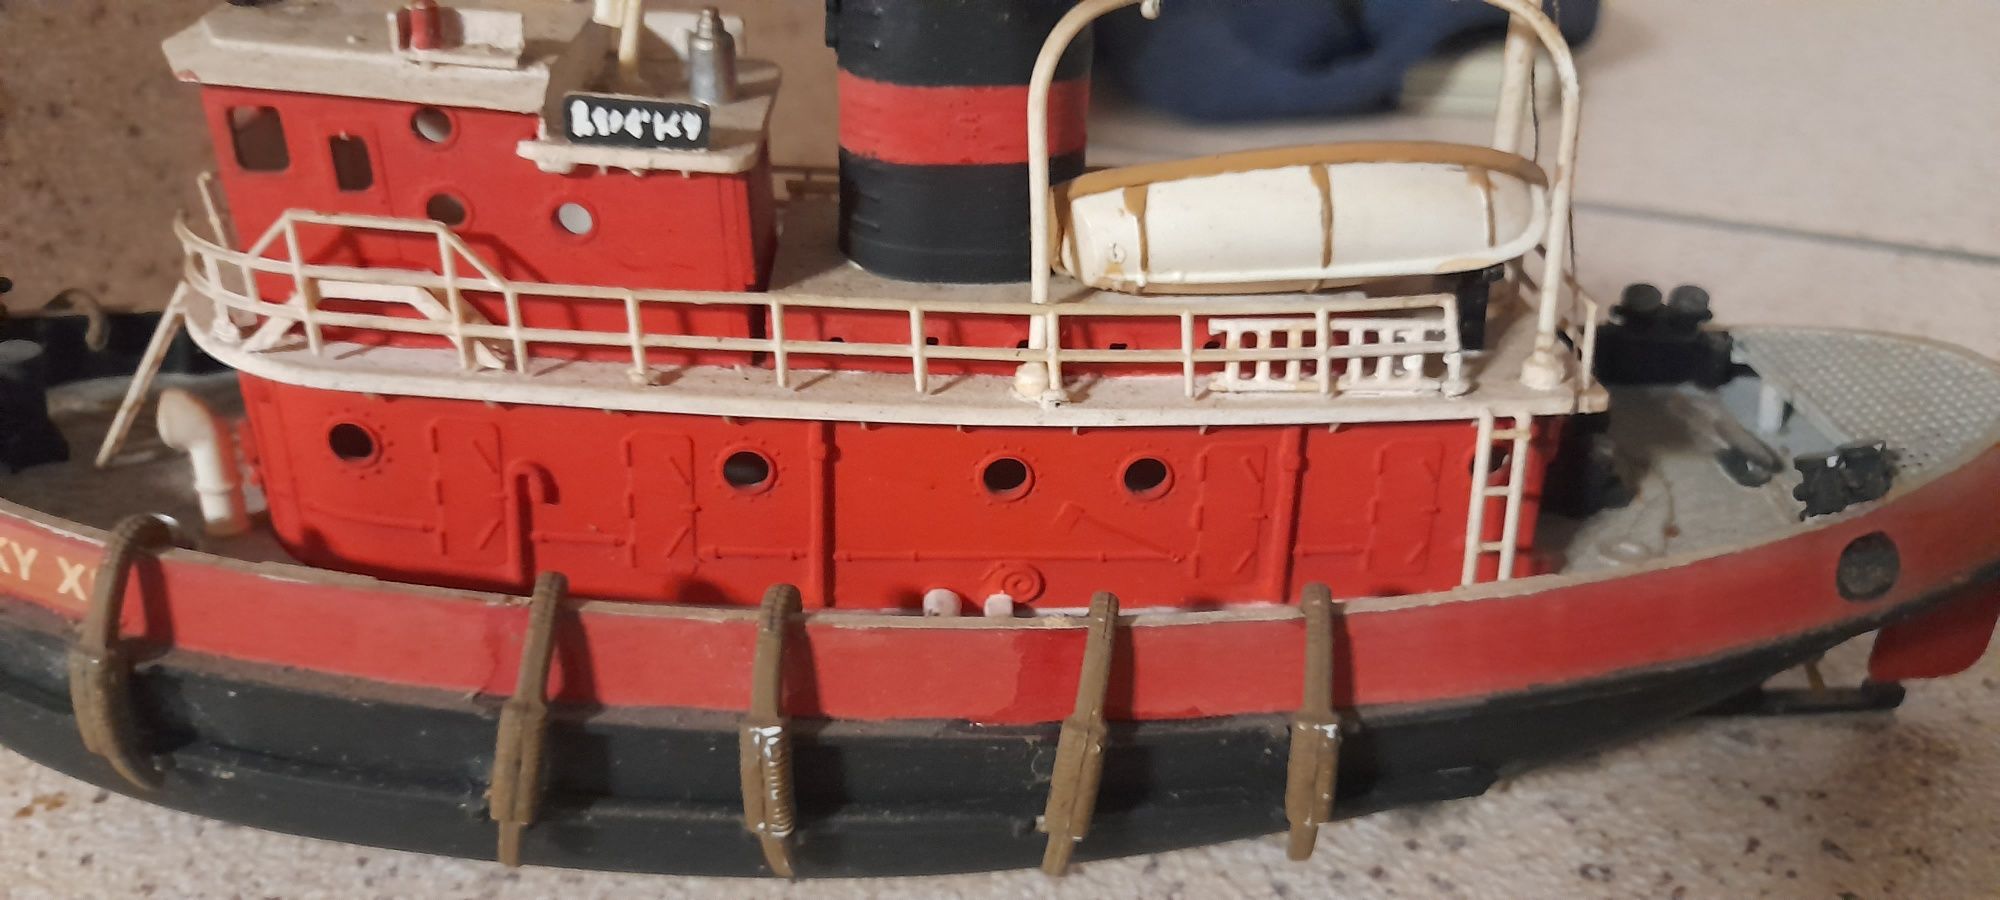 Barco kit montado